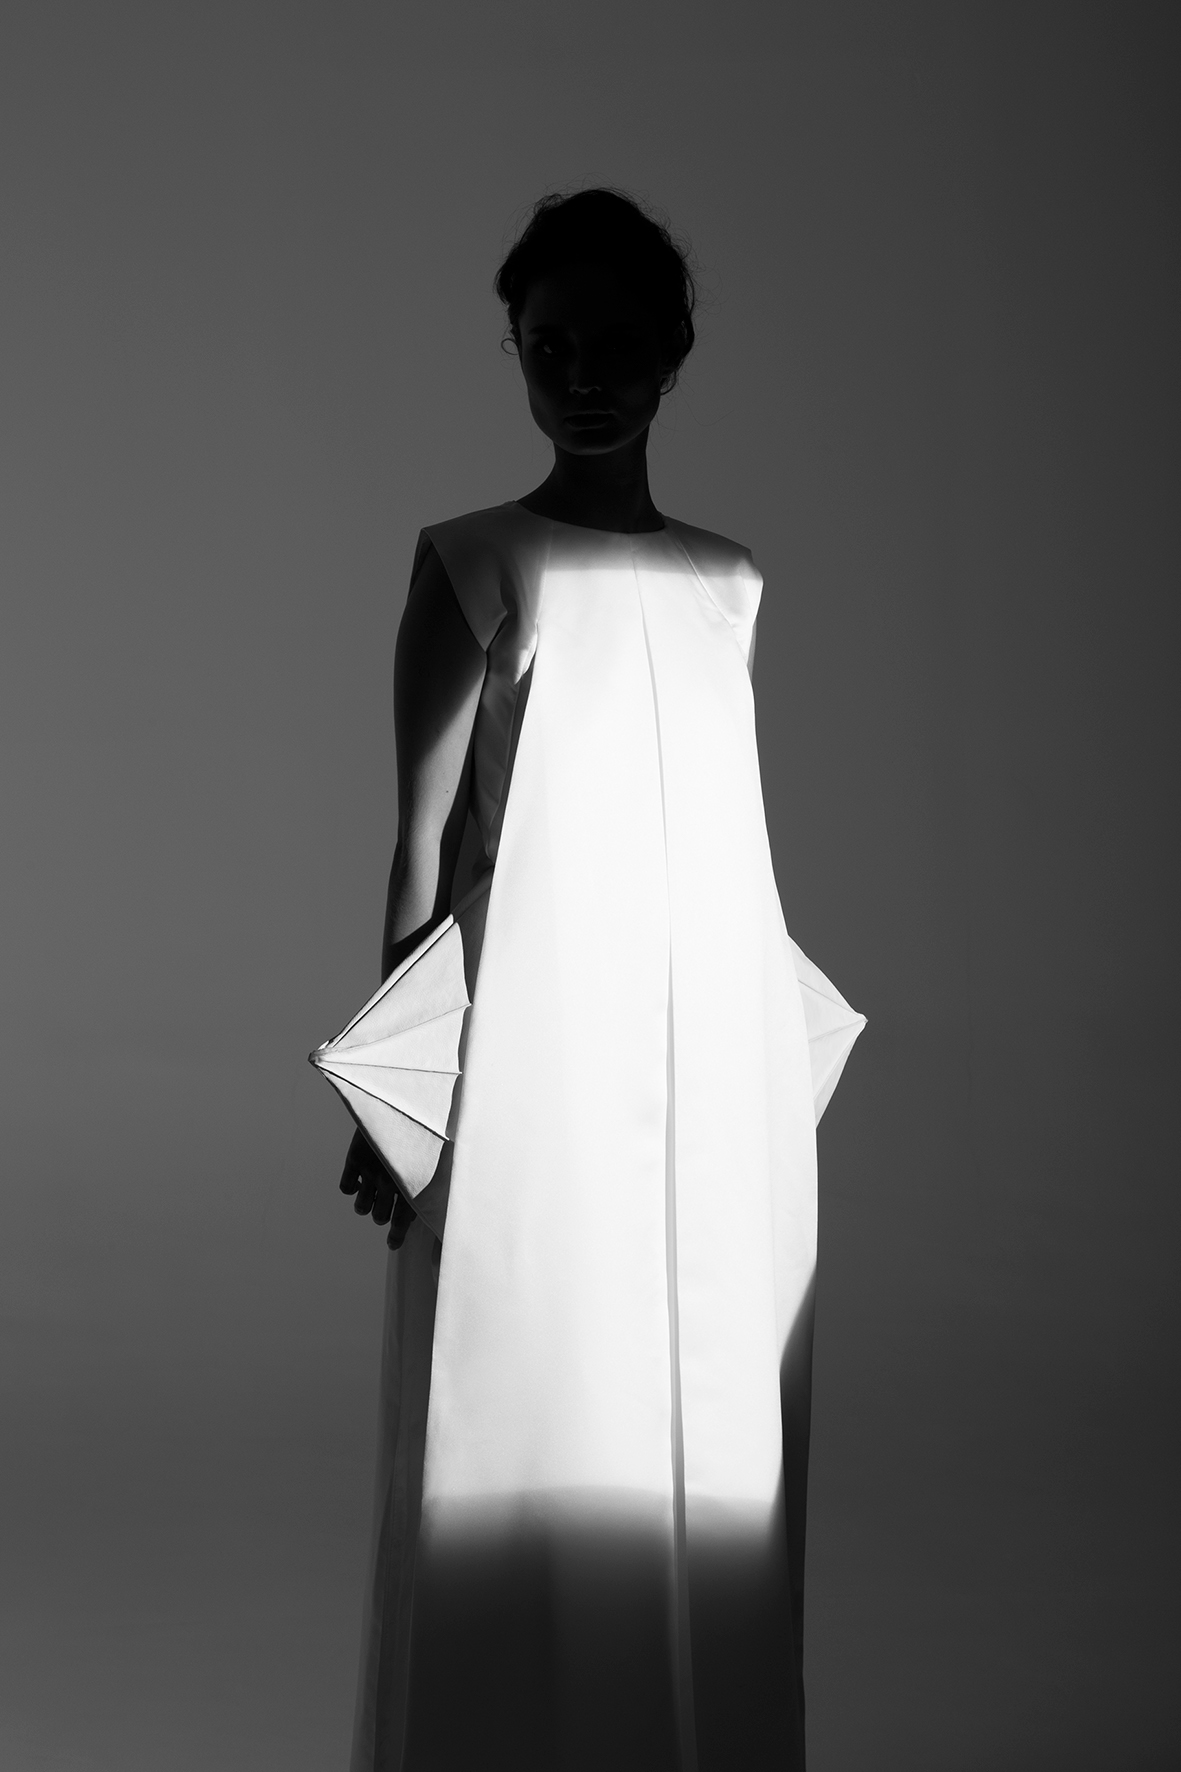 Santiago calatrava moda roupas clothes coleção Collection White black Shadows preto branco conceptual